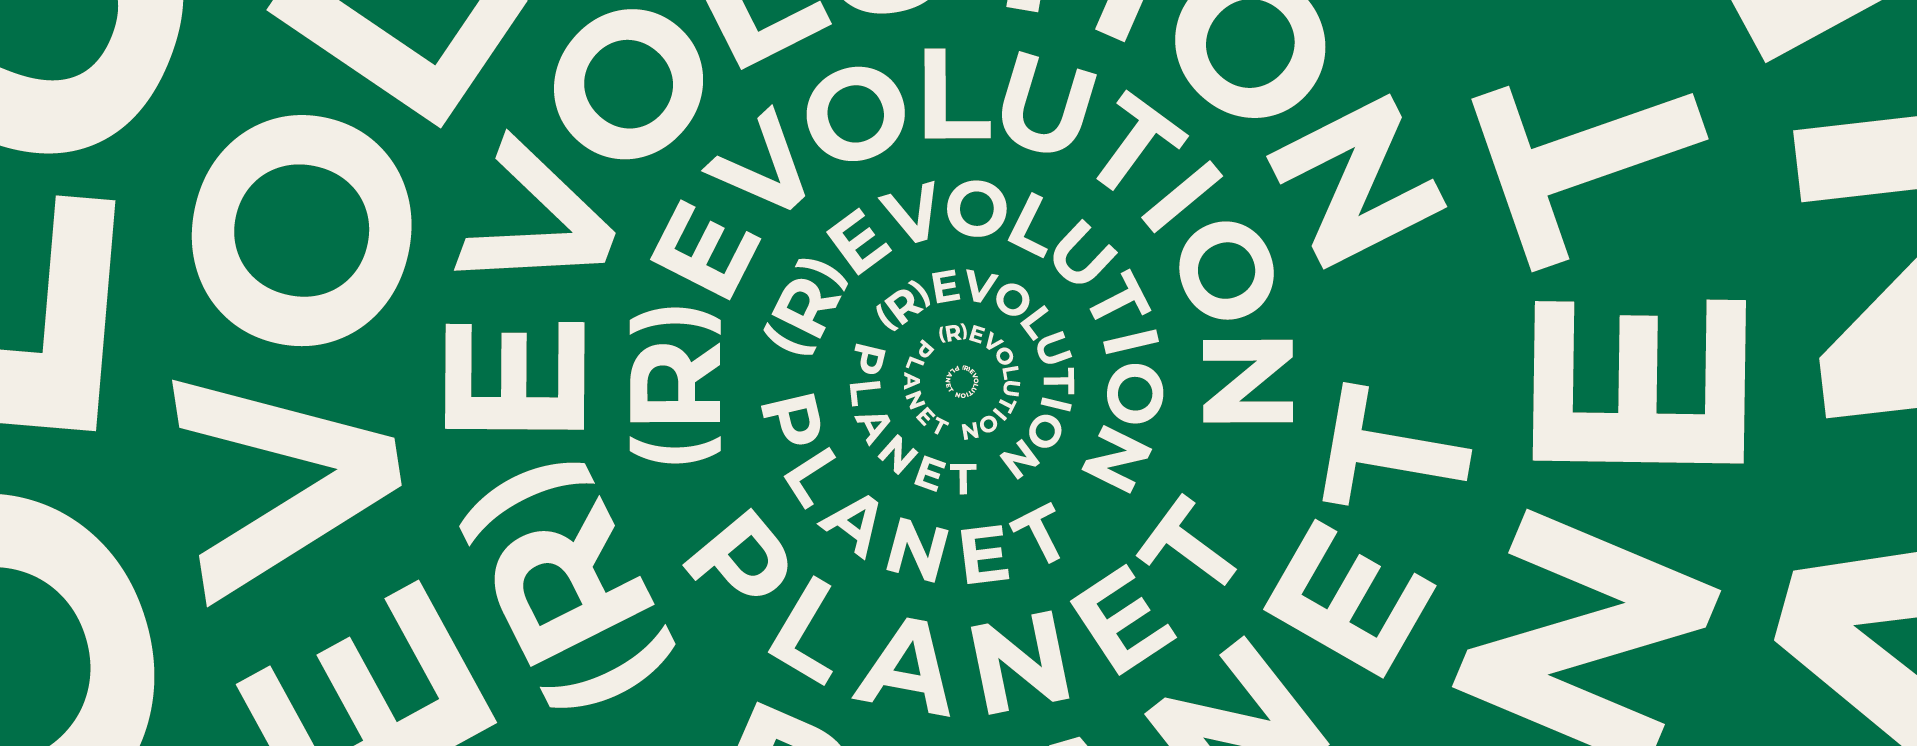  AVB-revolution-planet-2880x900-white-with-green-logo.png